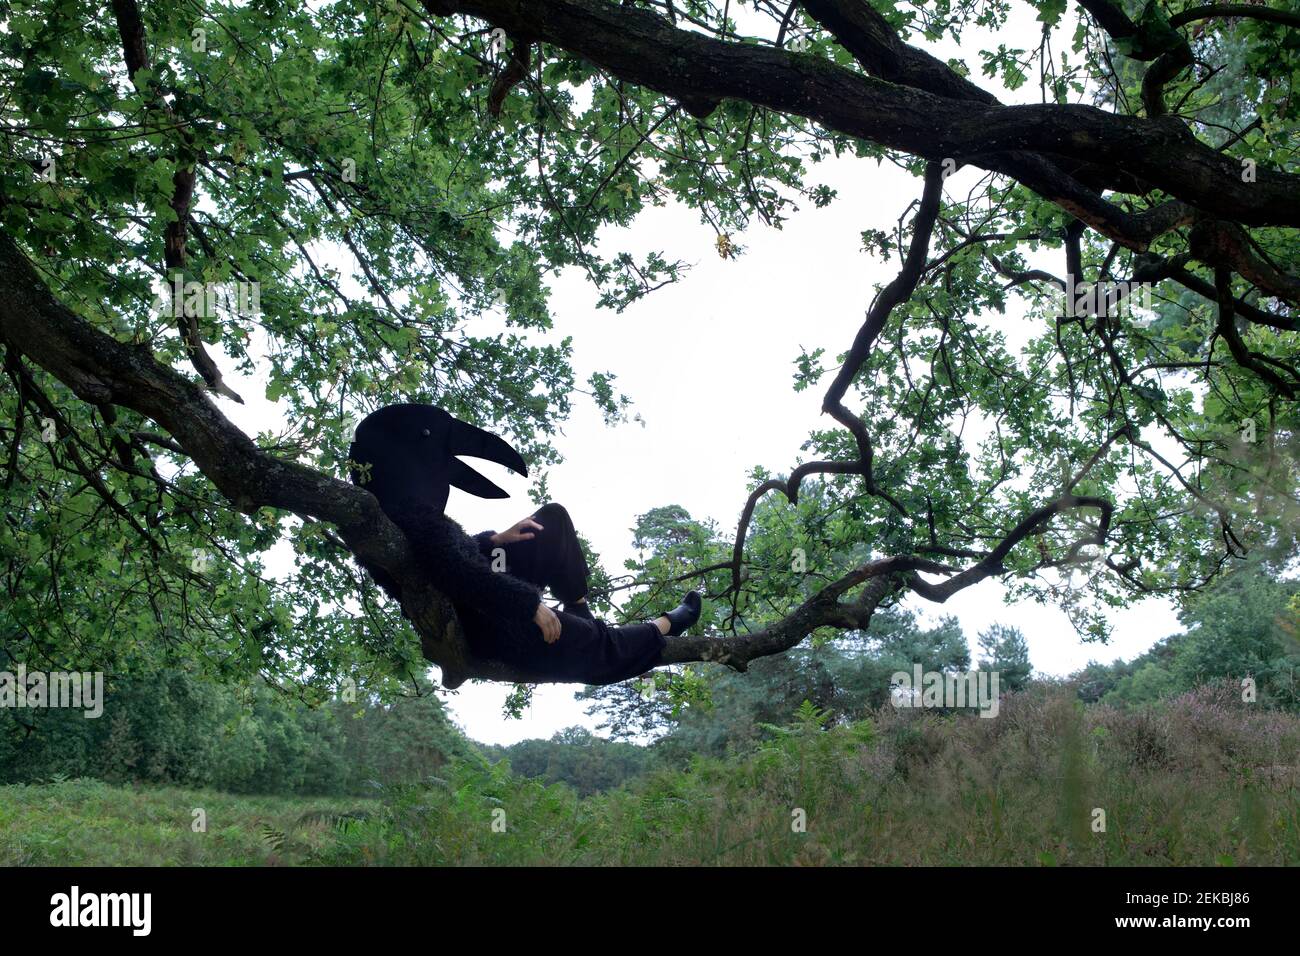 Woman in bird costume lying on tree branch Stock Photo